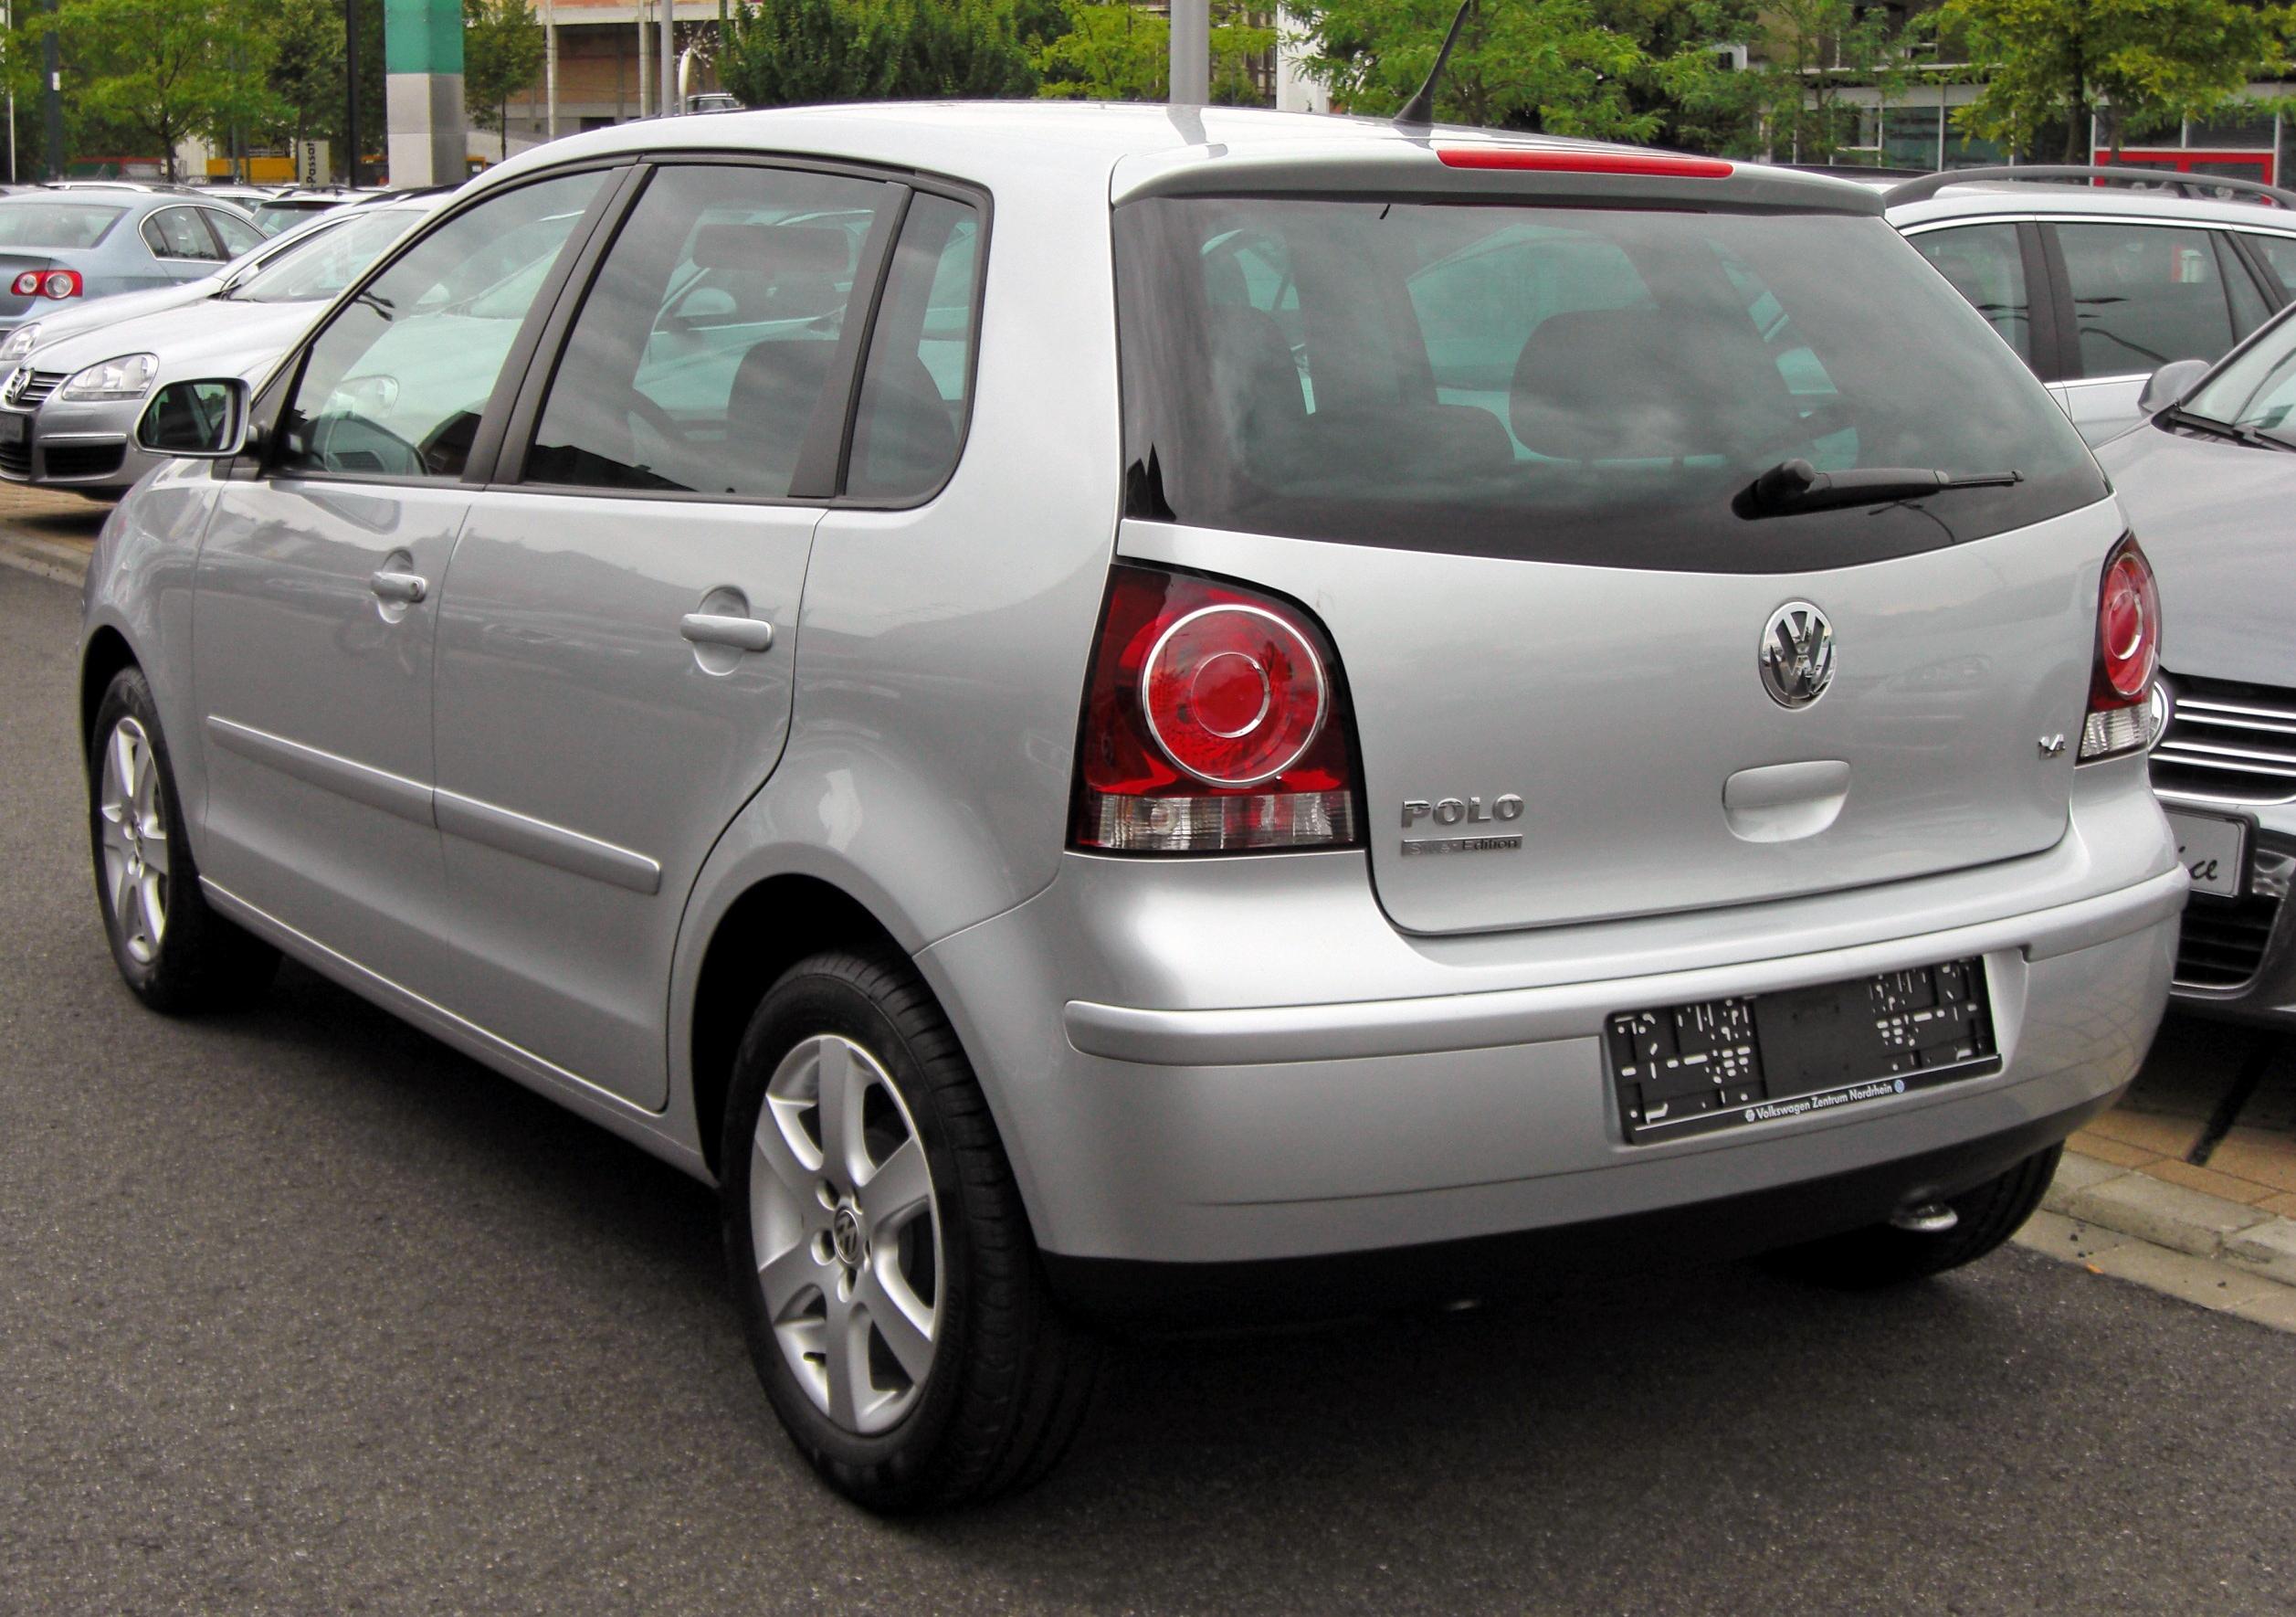 File:2005-2008 Volkswagen Polo (9N3) GTI 3-door hatchback 02.jpg - Wikipedia